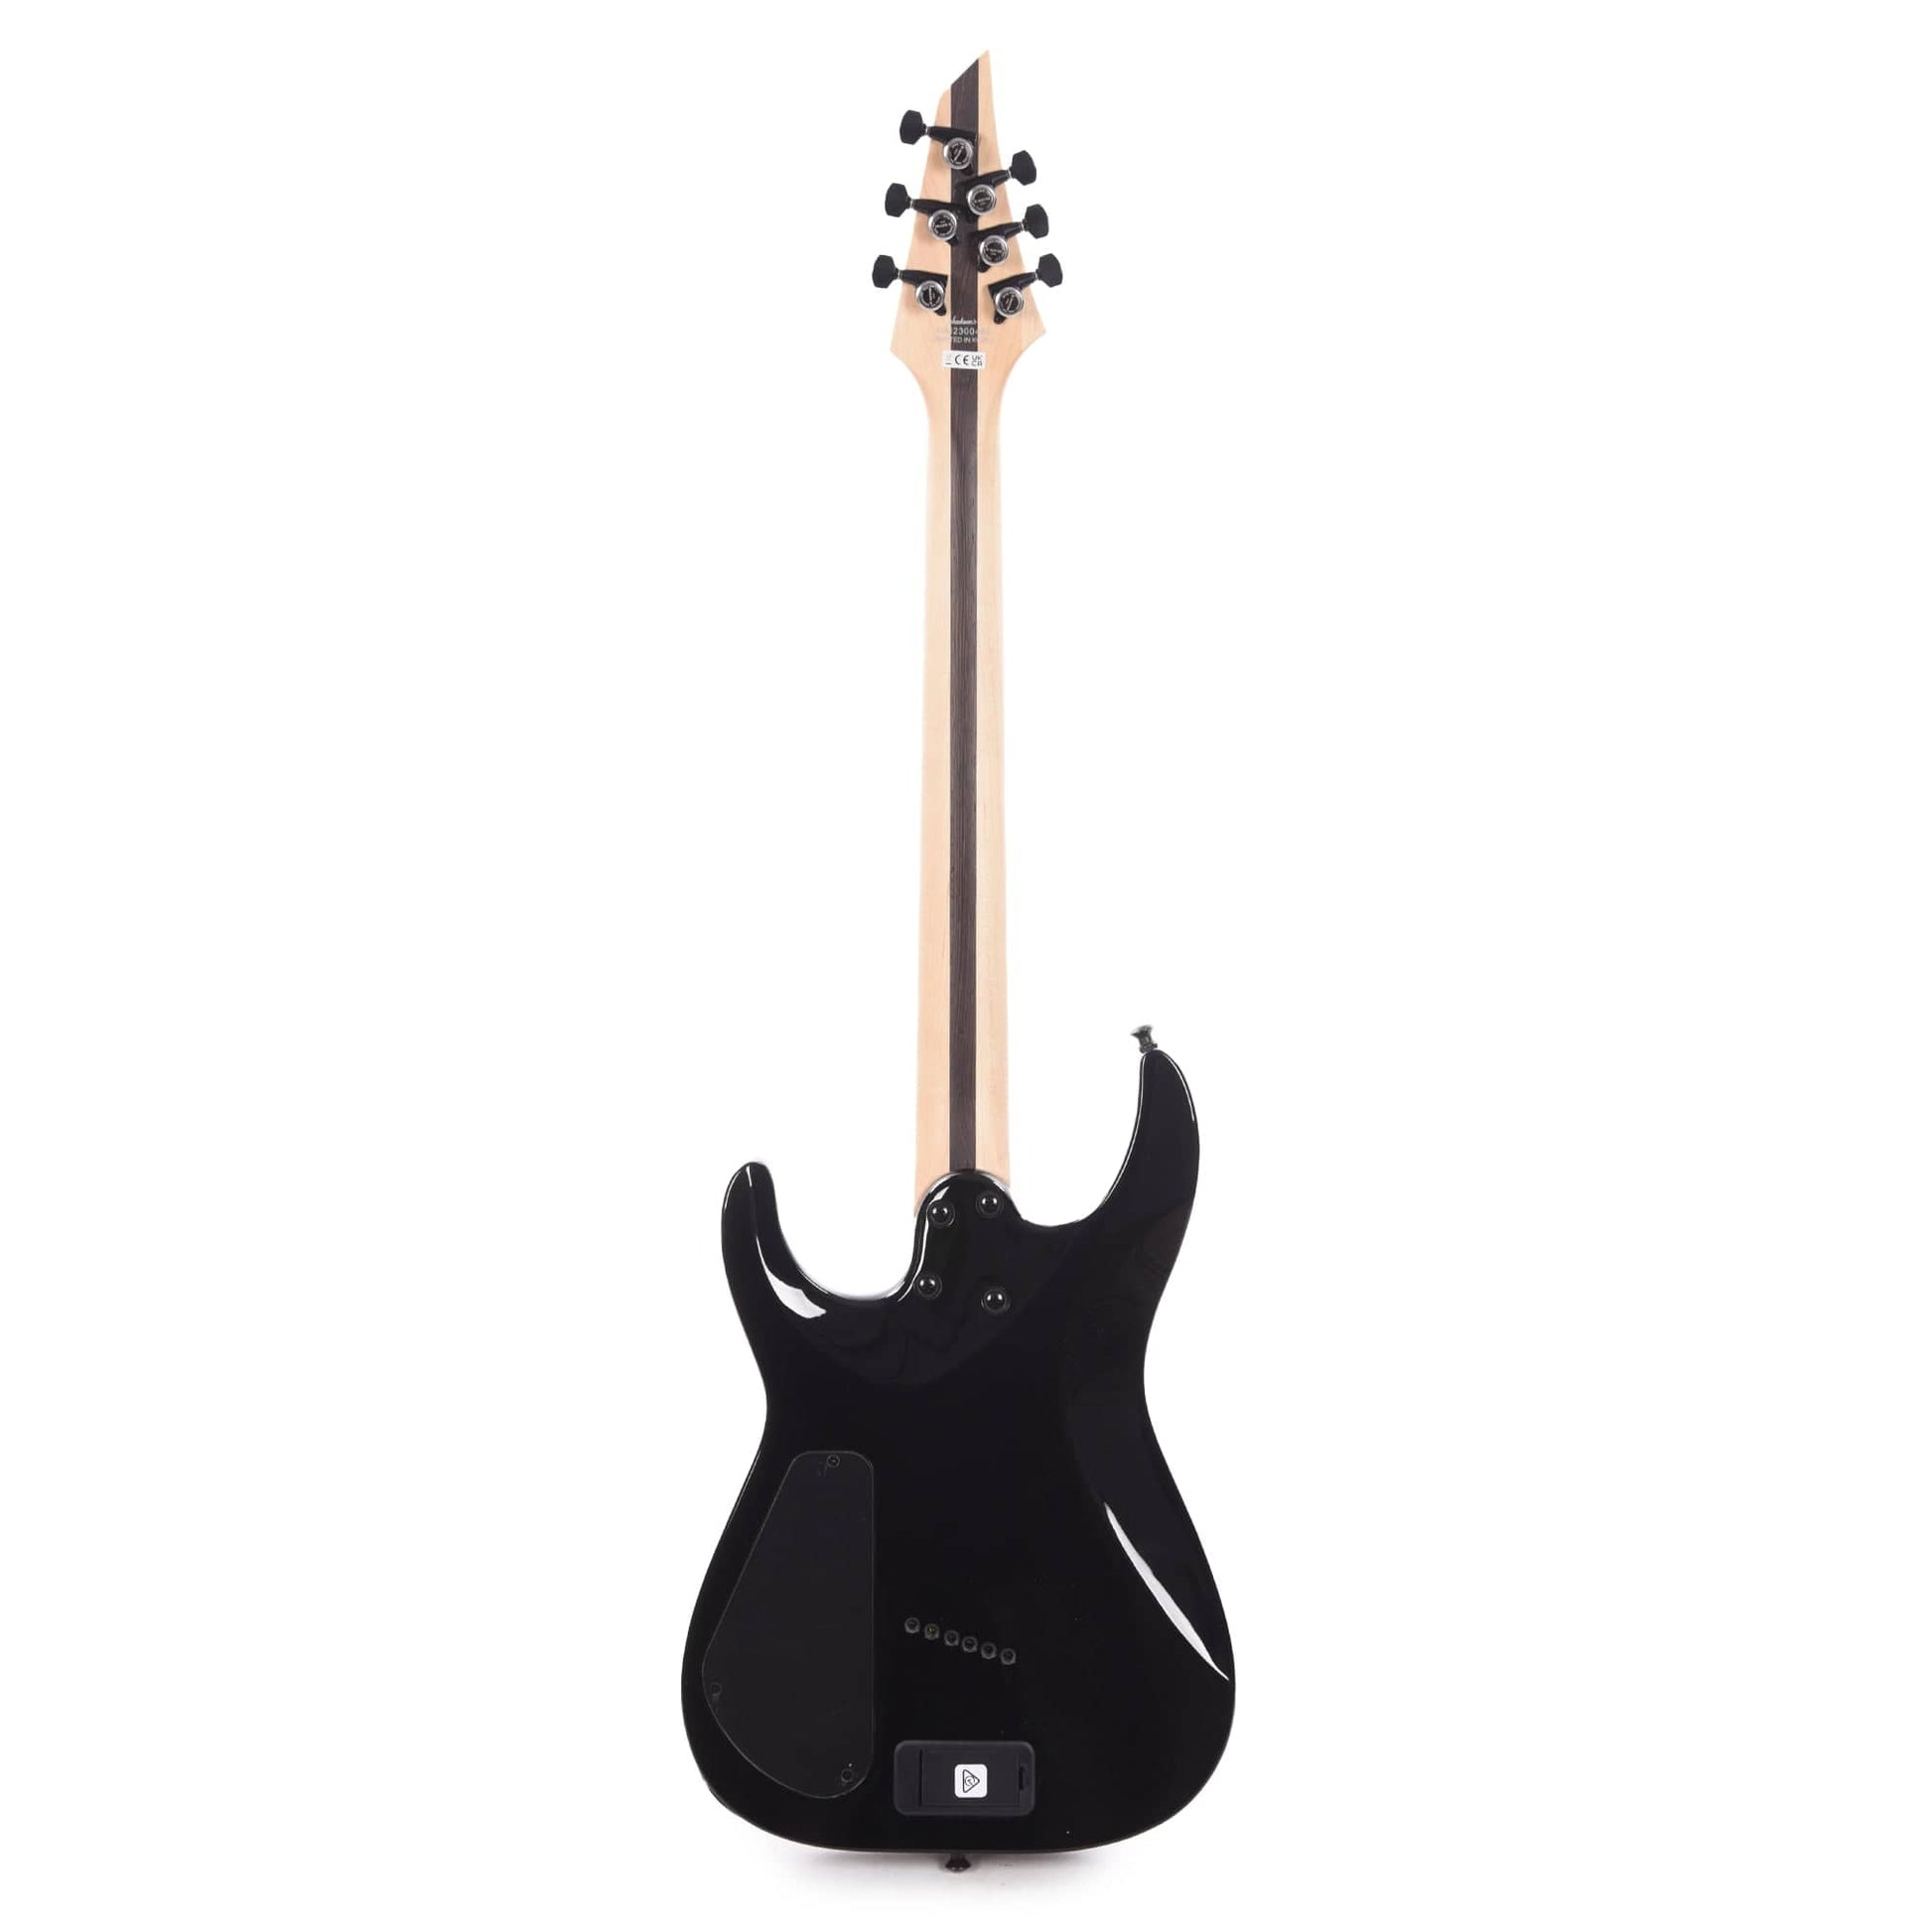 Jackson Pro Plus Series DK Modern MS HT6 Gloss Black Electric Guitars / Solid Body